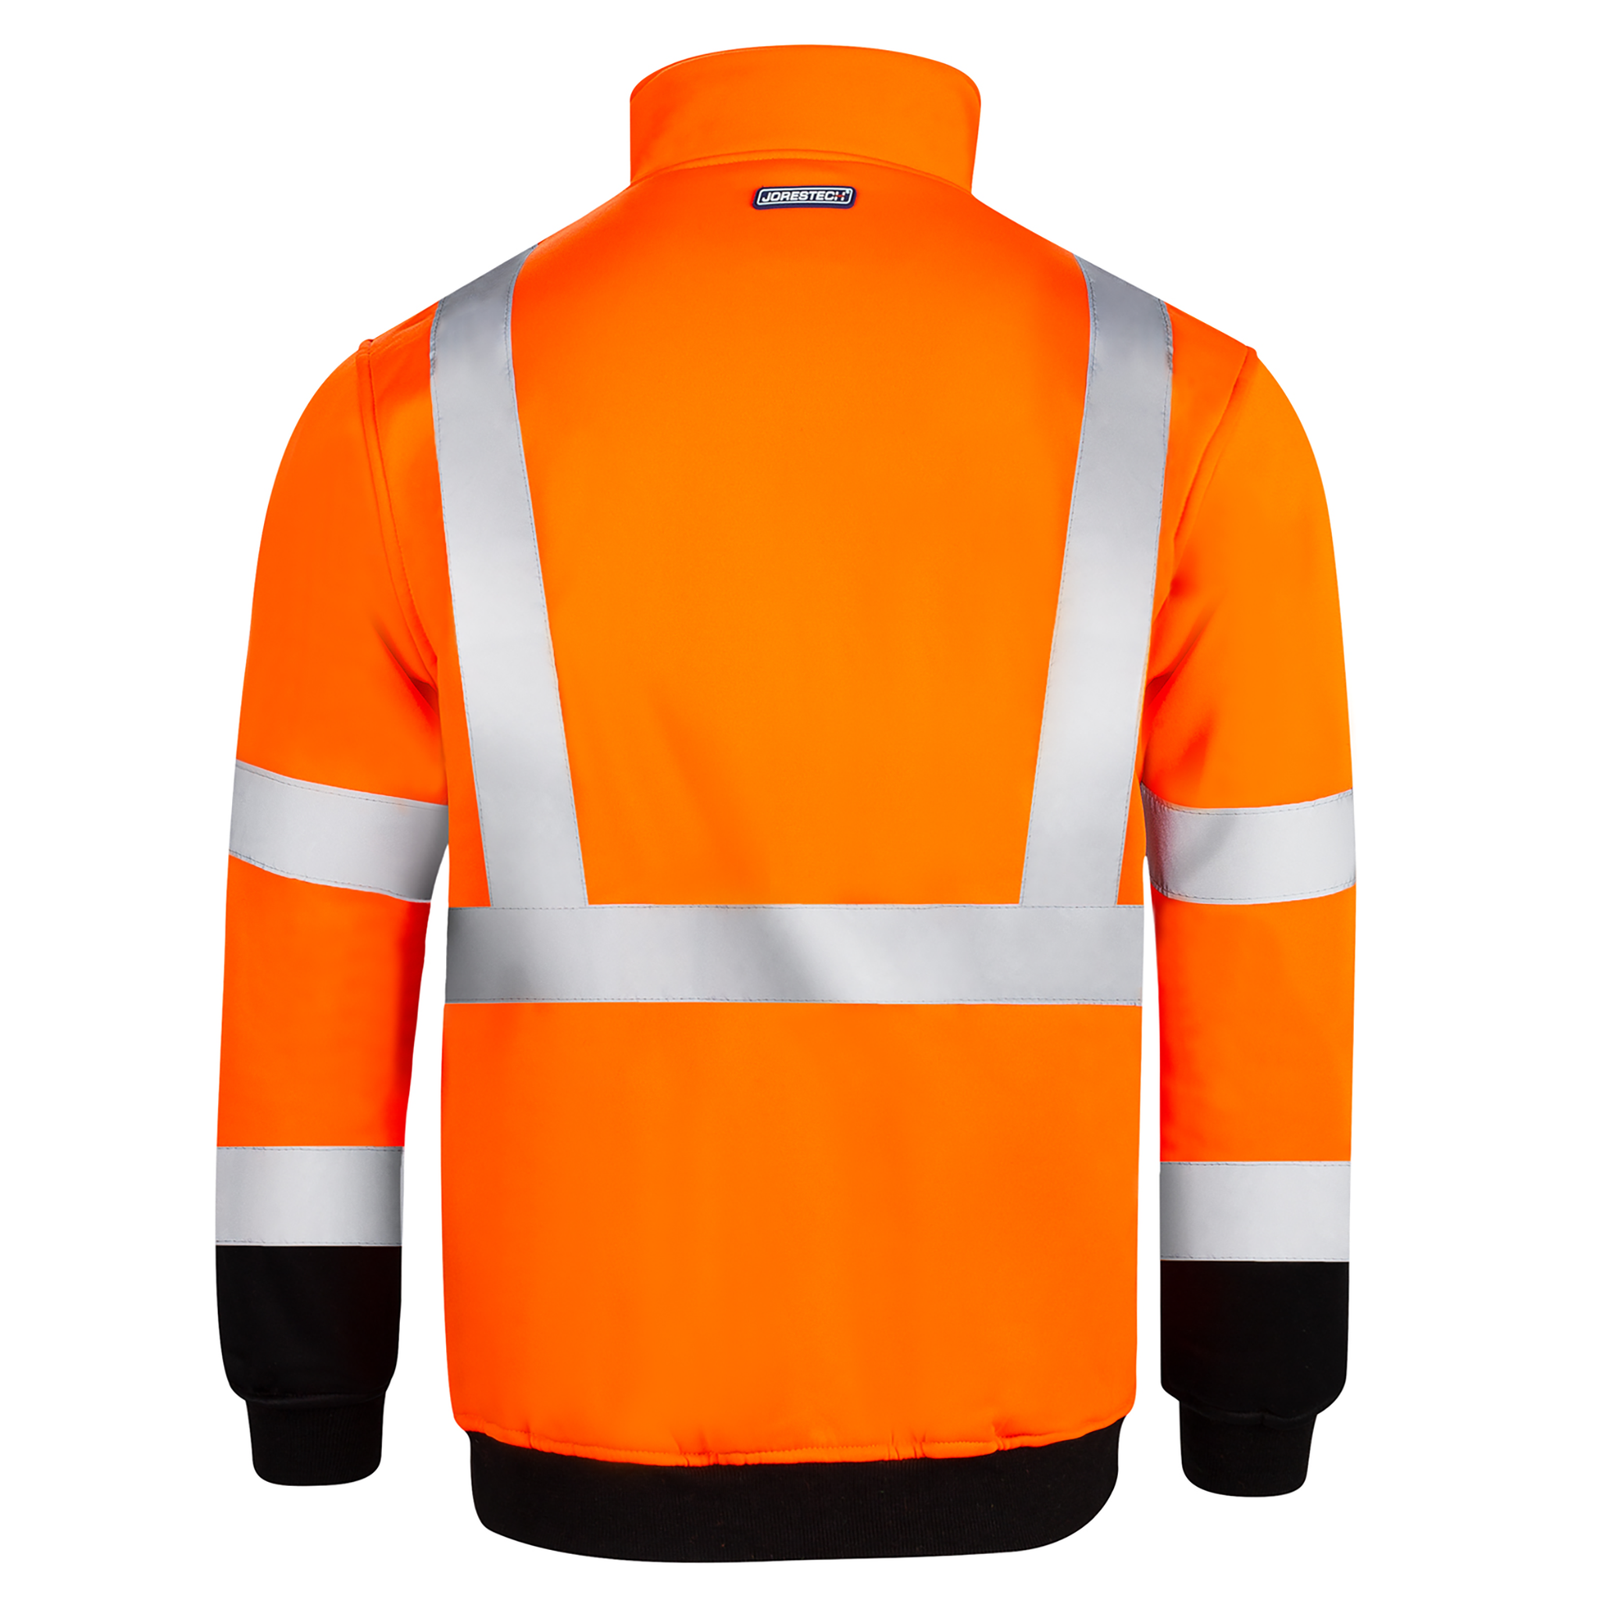 Orange JORESTECH hi-vis safety sweater with 2